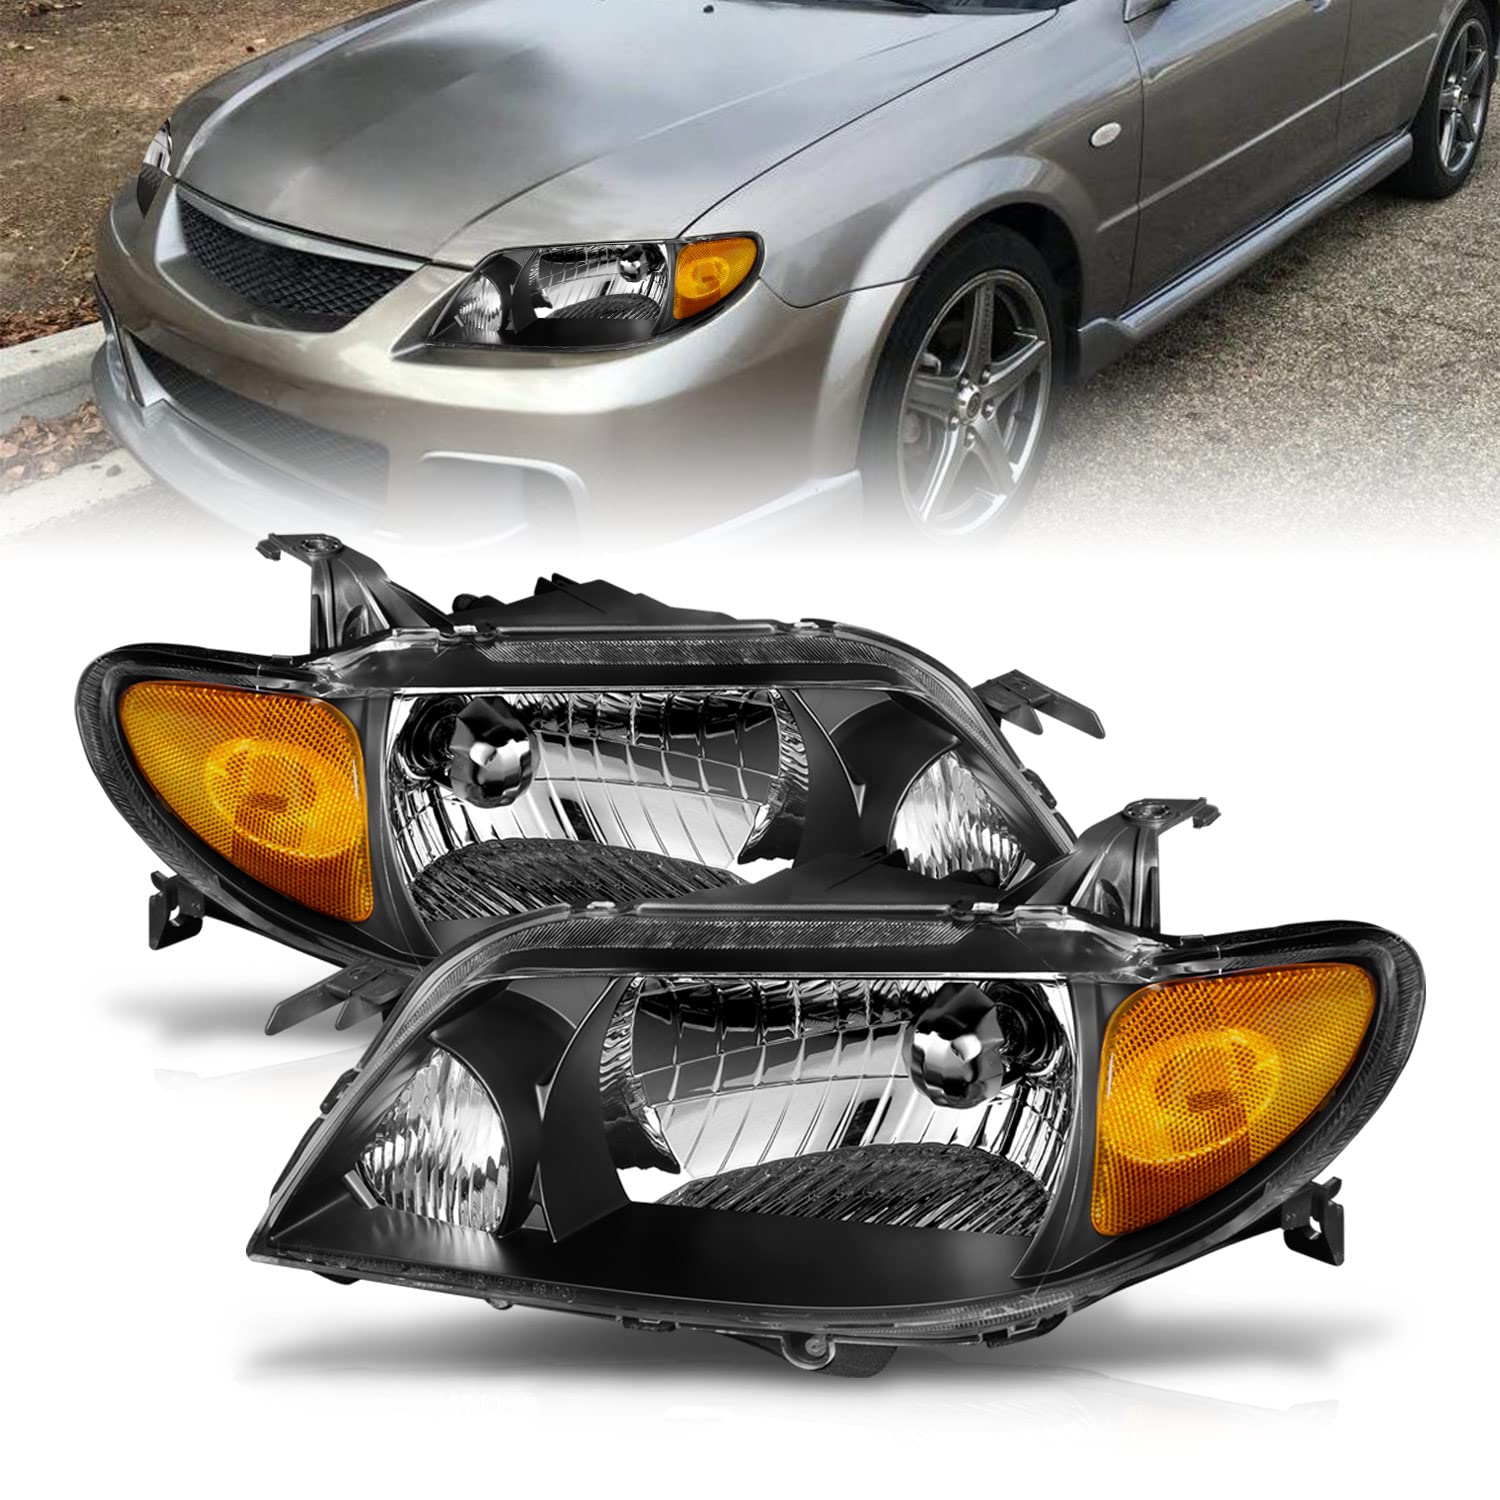 Amazon.com: AmeriLite Crystal Headlights Black Amber For Mazda Protege -  Passenger and Driver Side : Automotive